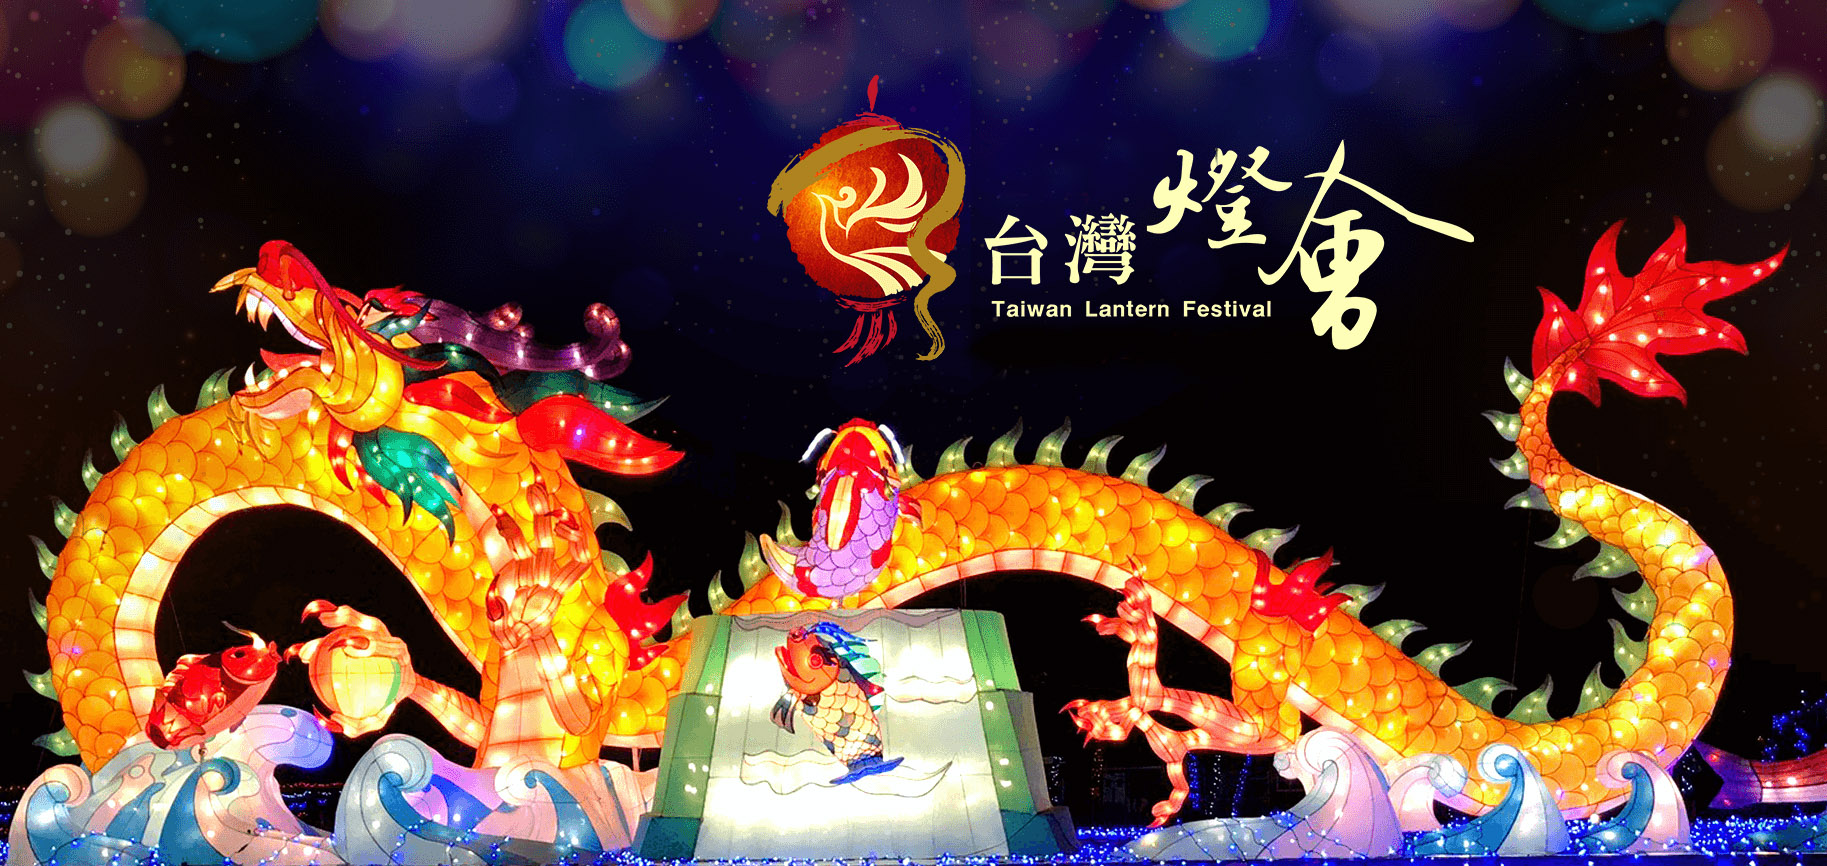 2018 Taiwan Lantern Festival